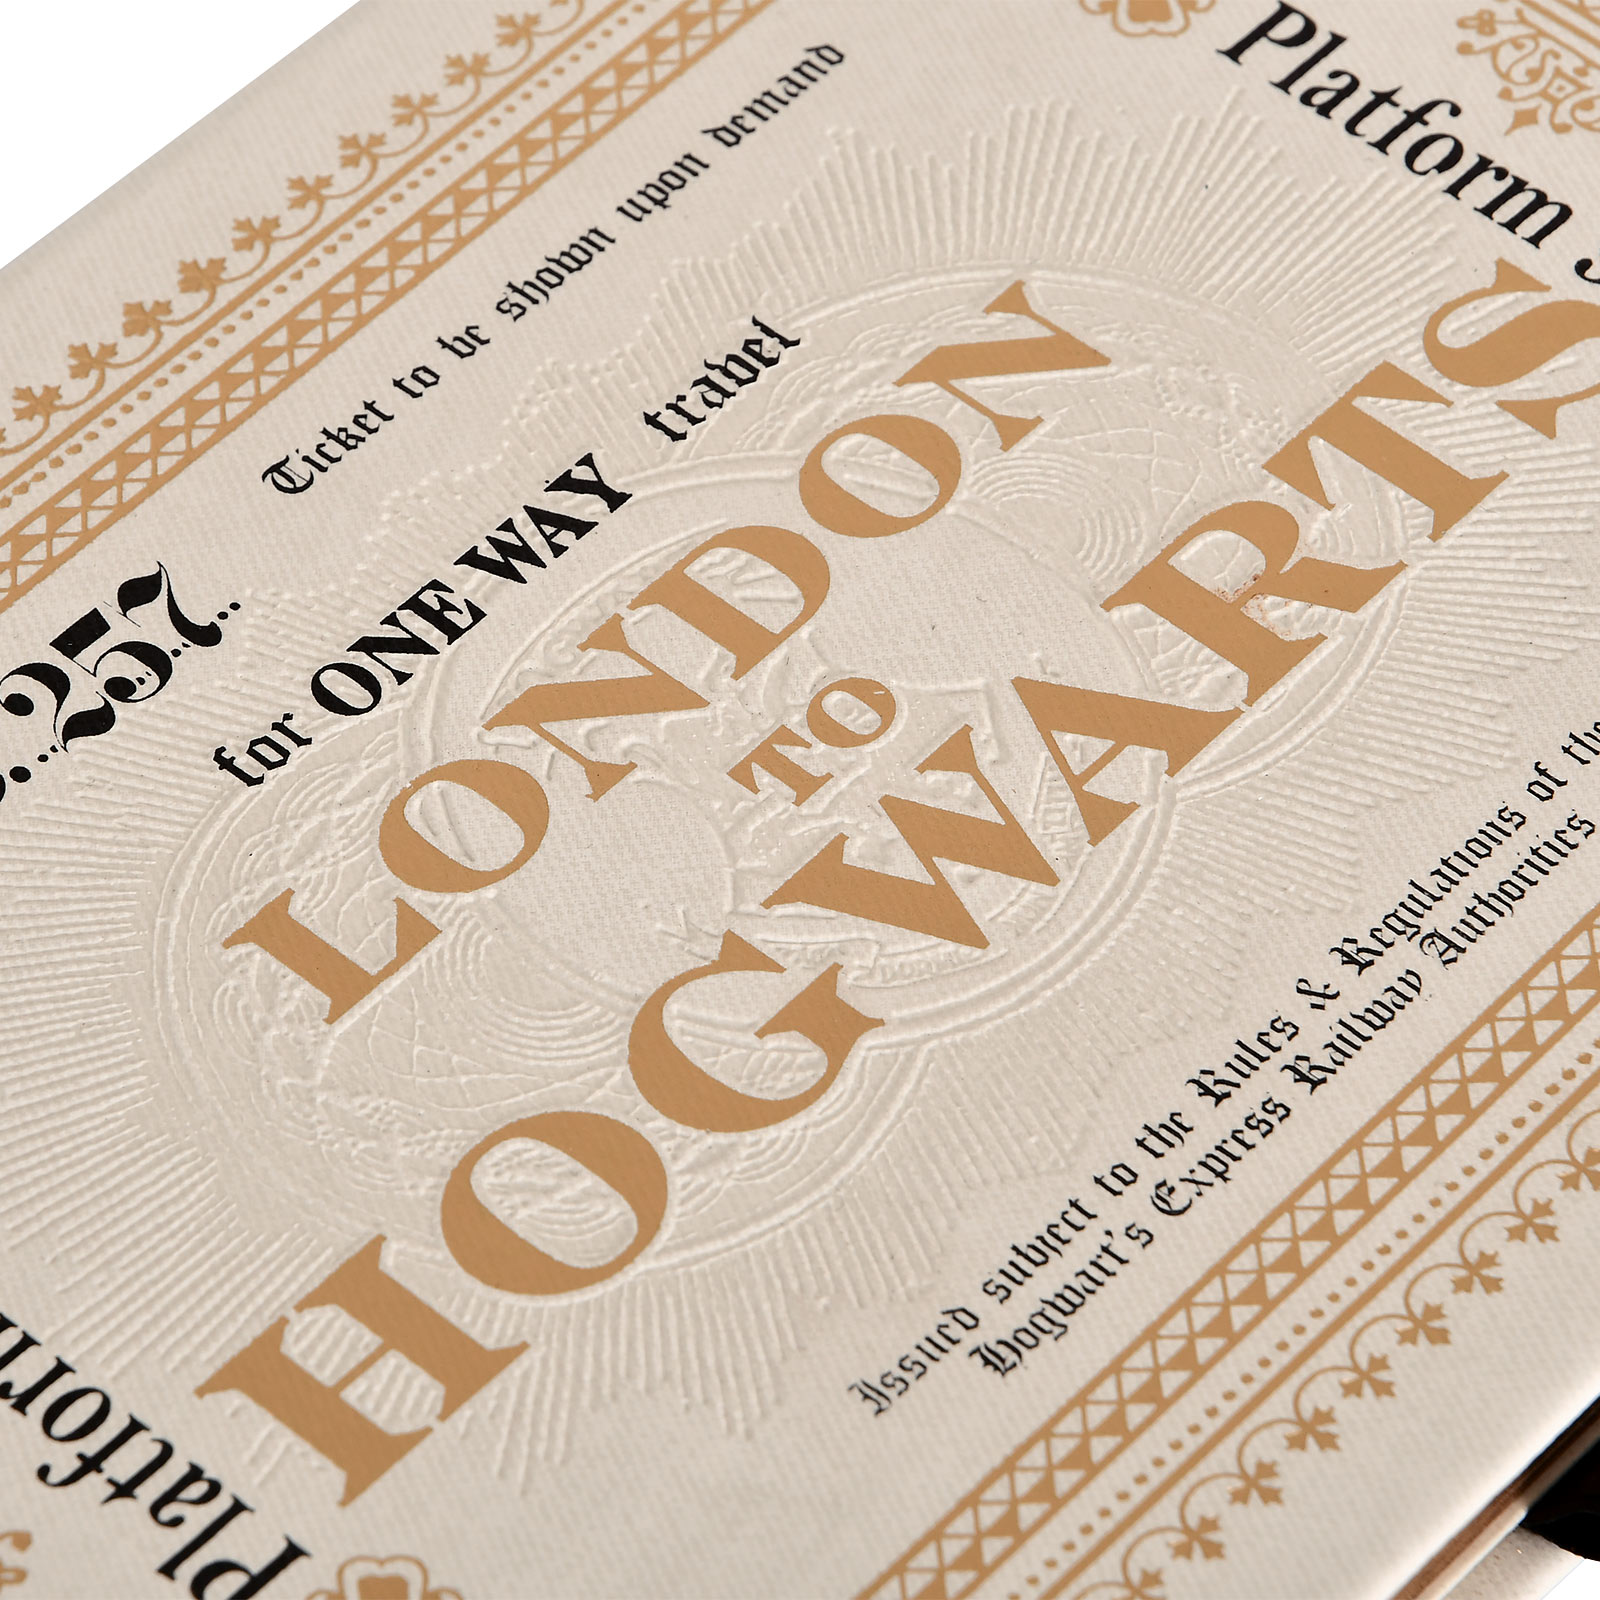 Harry Potter - Hogwarts Express Ticket Premium Notitieboek A5